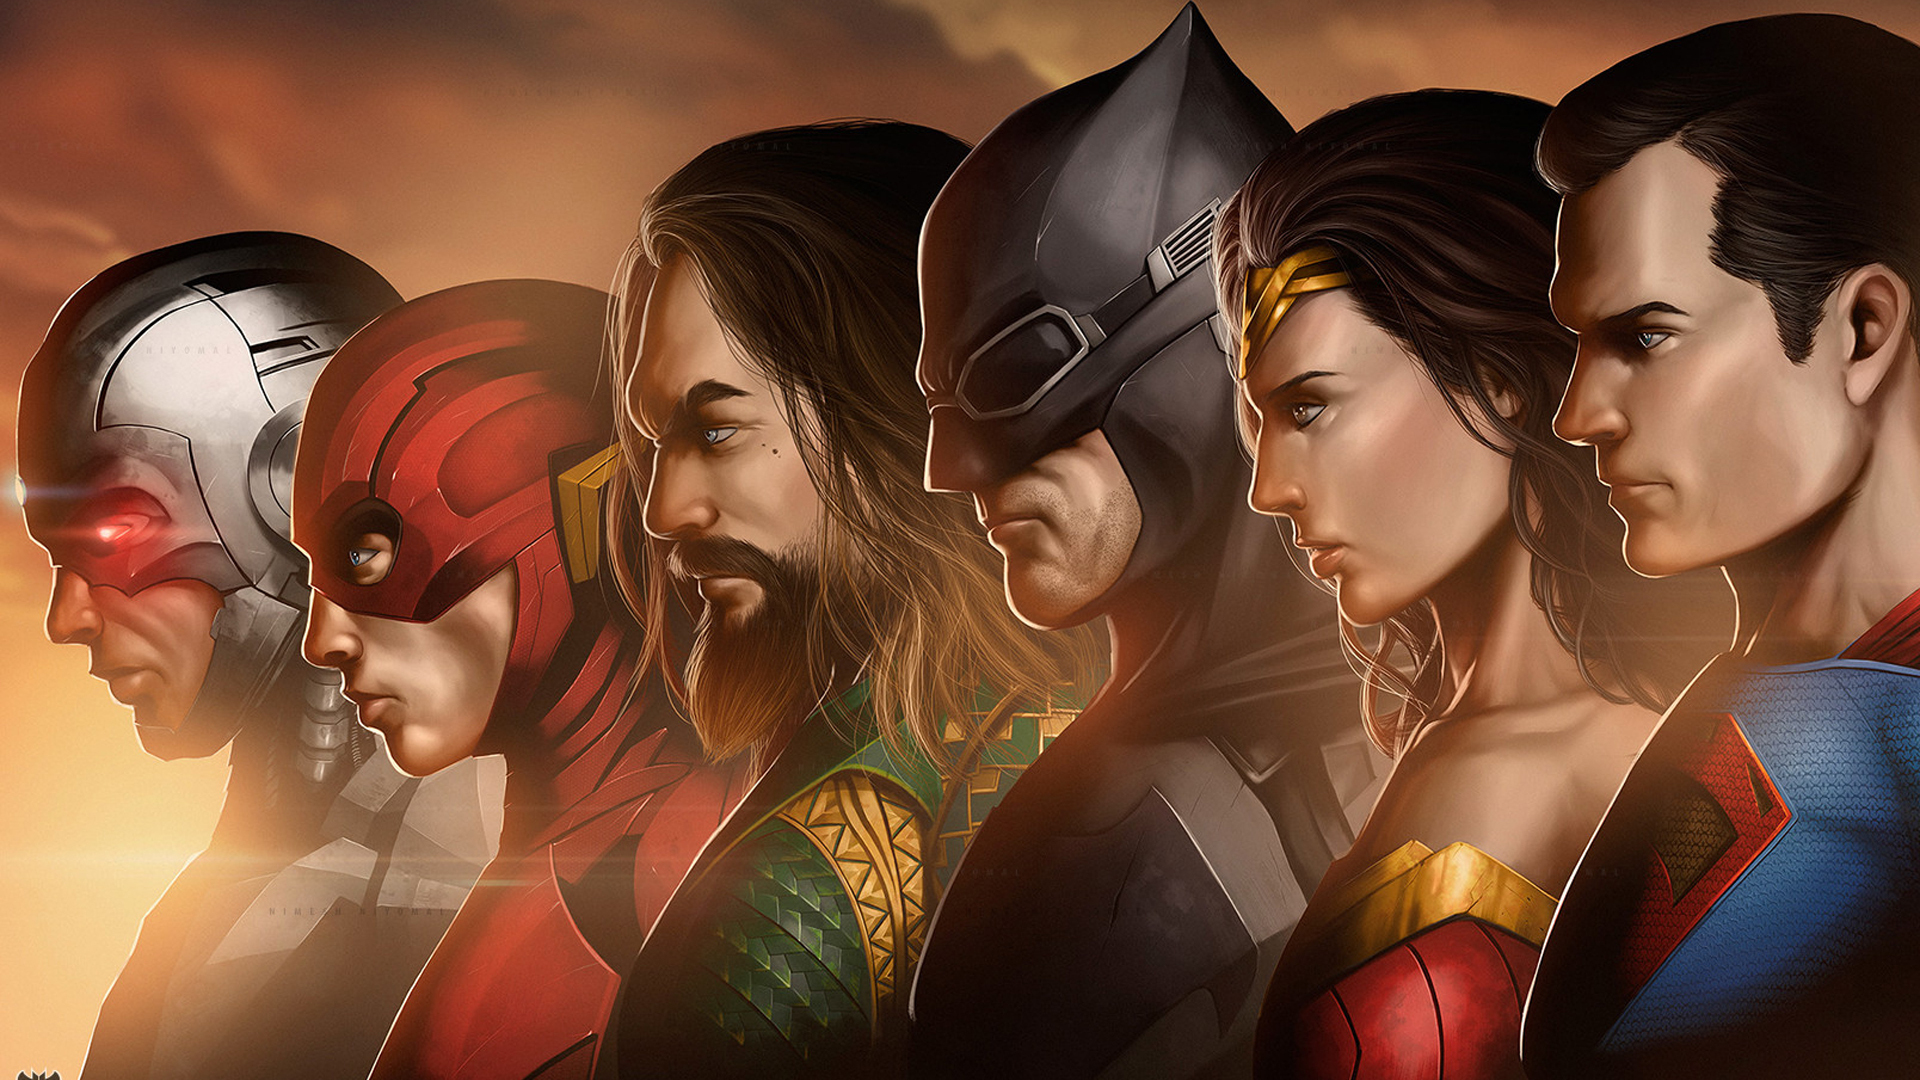 justice league hd wallpaper,cg artwork,fictional character,superhero,justice league,illustration